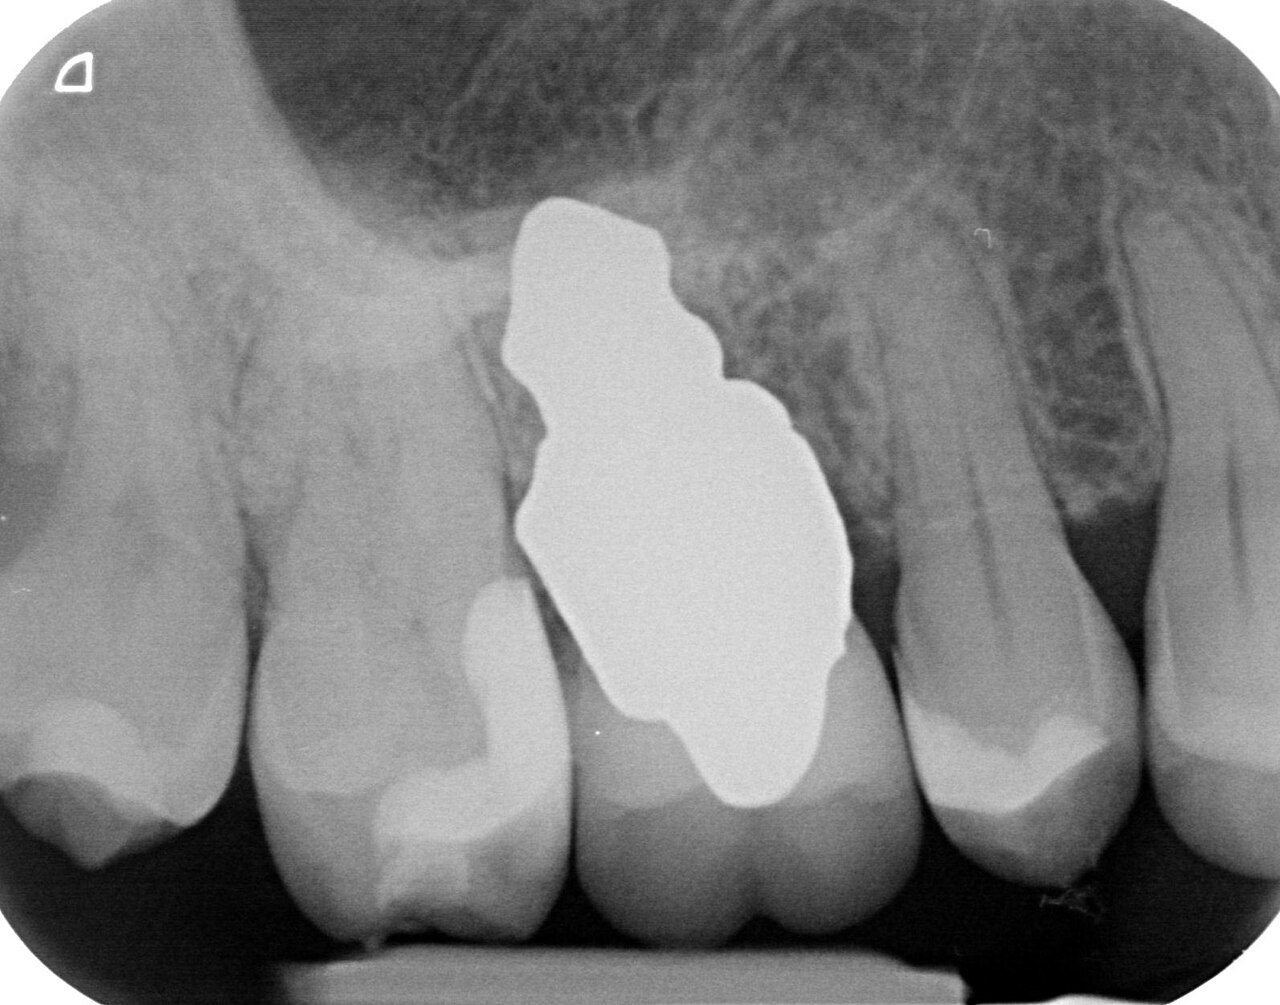 dental implant xray